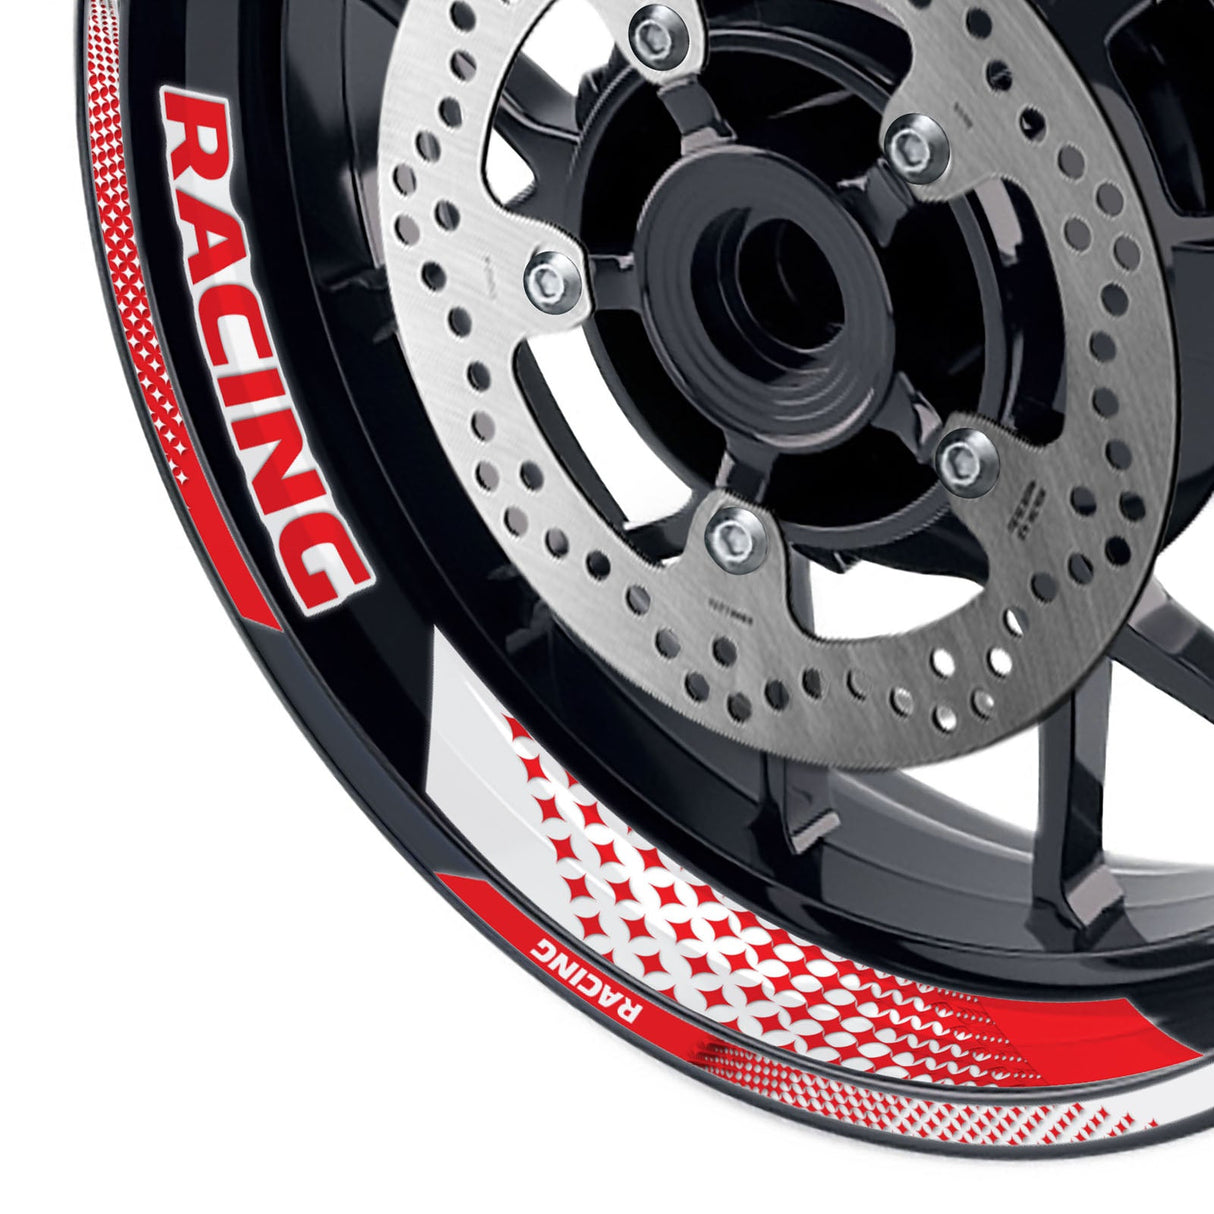 StickerBao Red 17 inch GP07 Platinum Inner Edge Rim Sticker Universal Motorcycle Rim Wheel Decal Racing For Suzuki